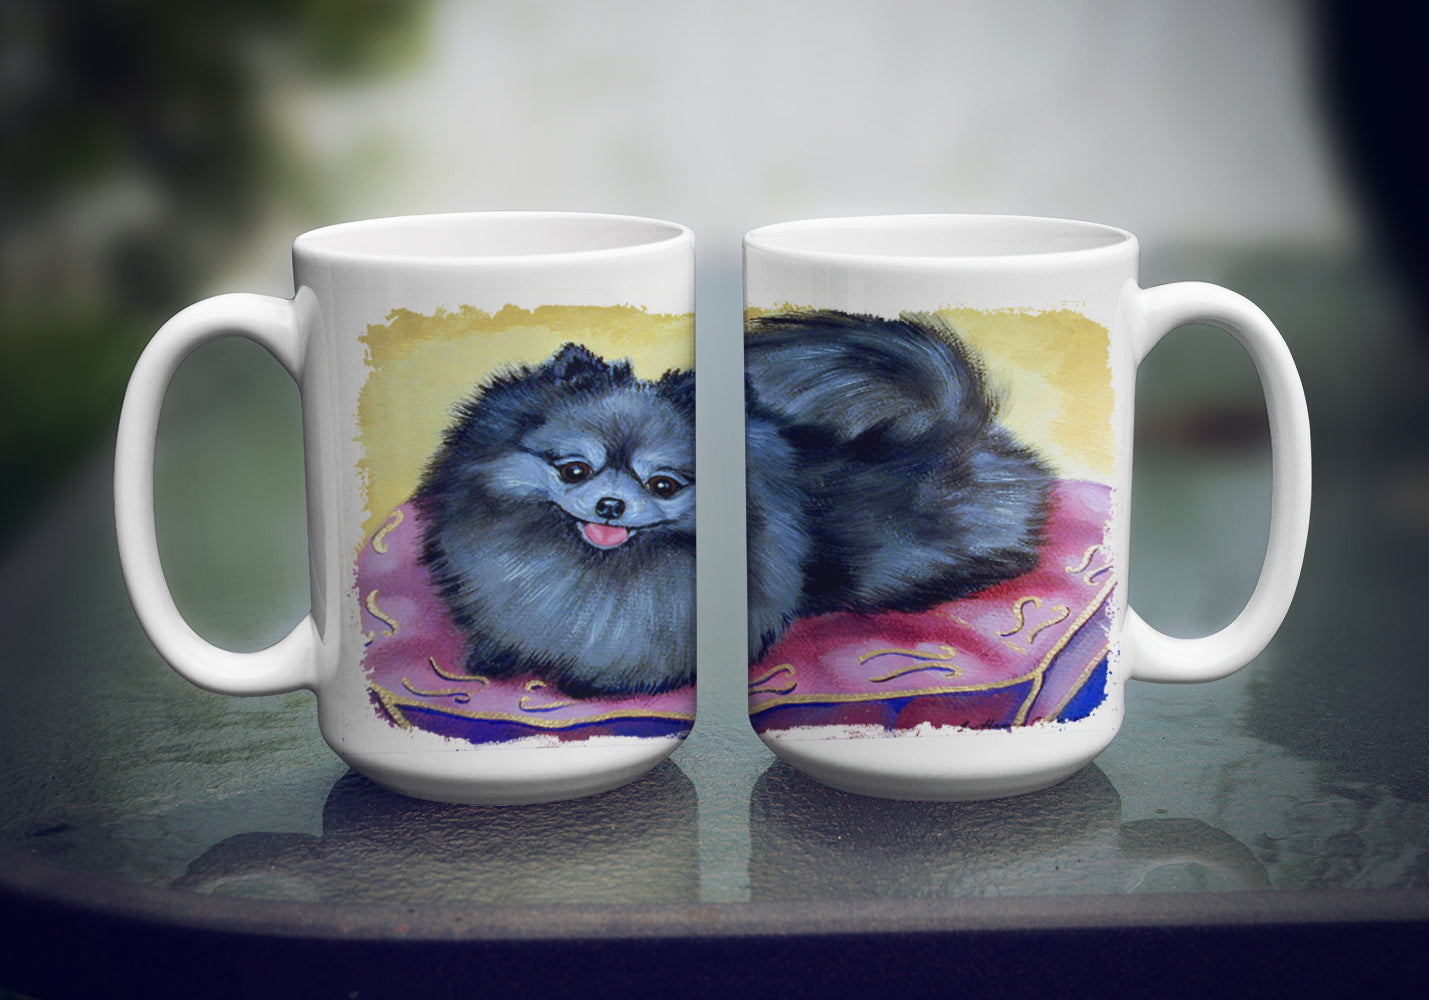 Pomeranian Dishwasher Safe Microwavable Ceramic Coffee Mug 15 ounce 7503CM15